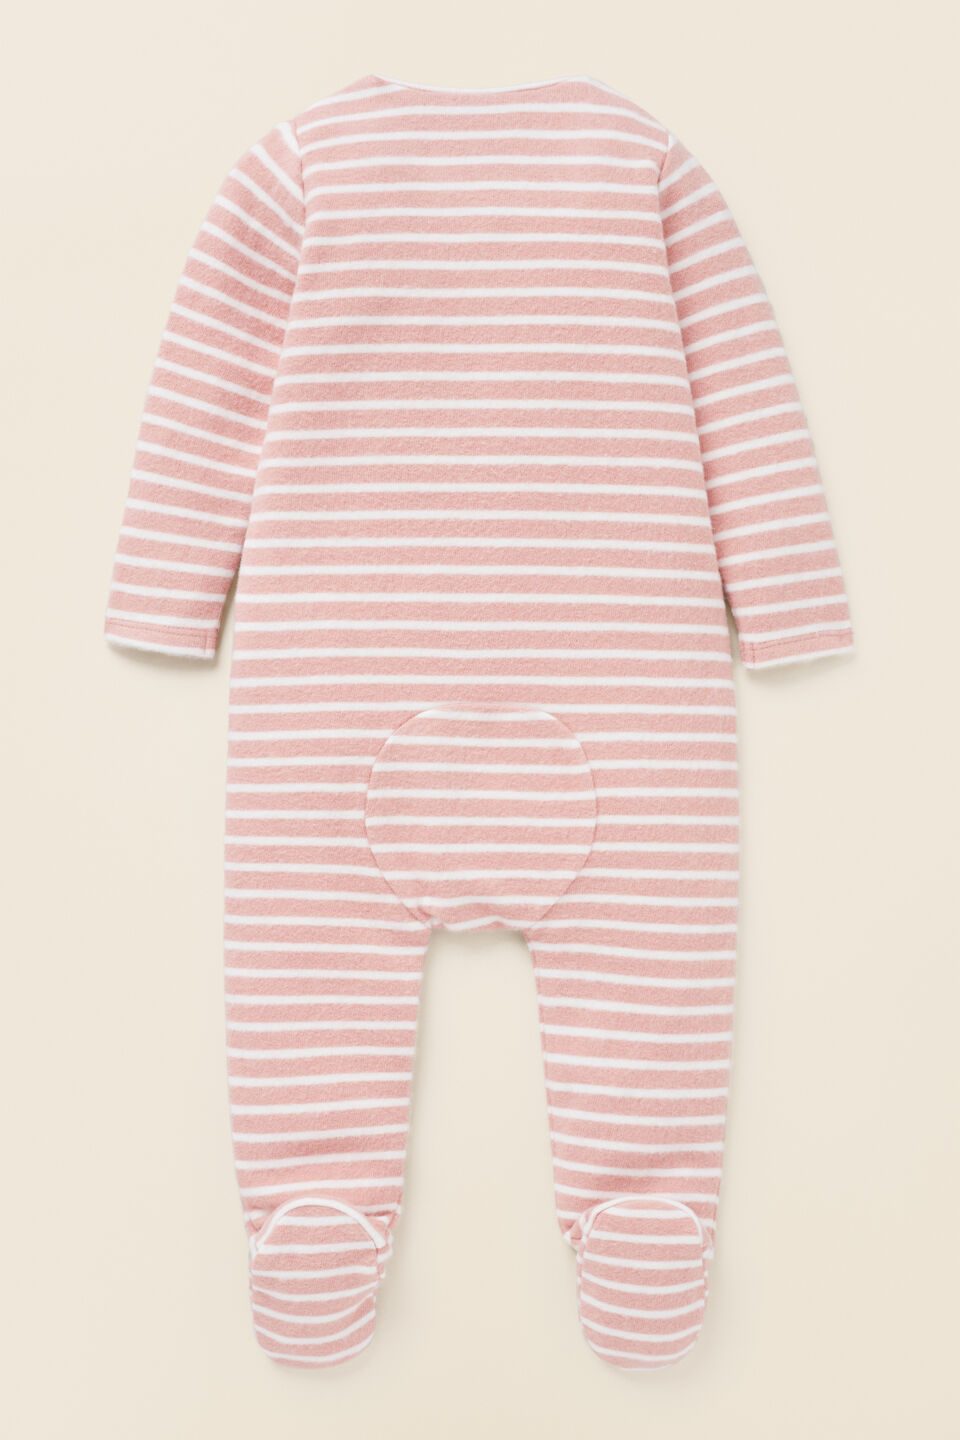 Brushed Stripe Zipsuit  Chalk Pink